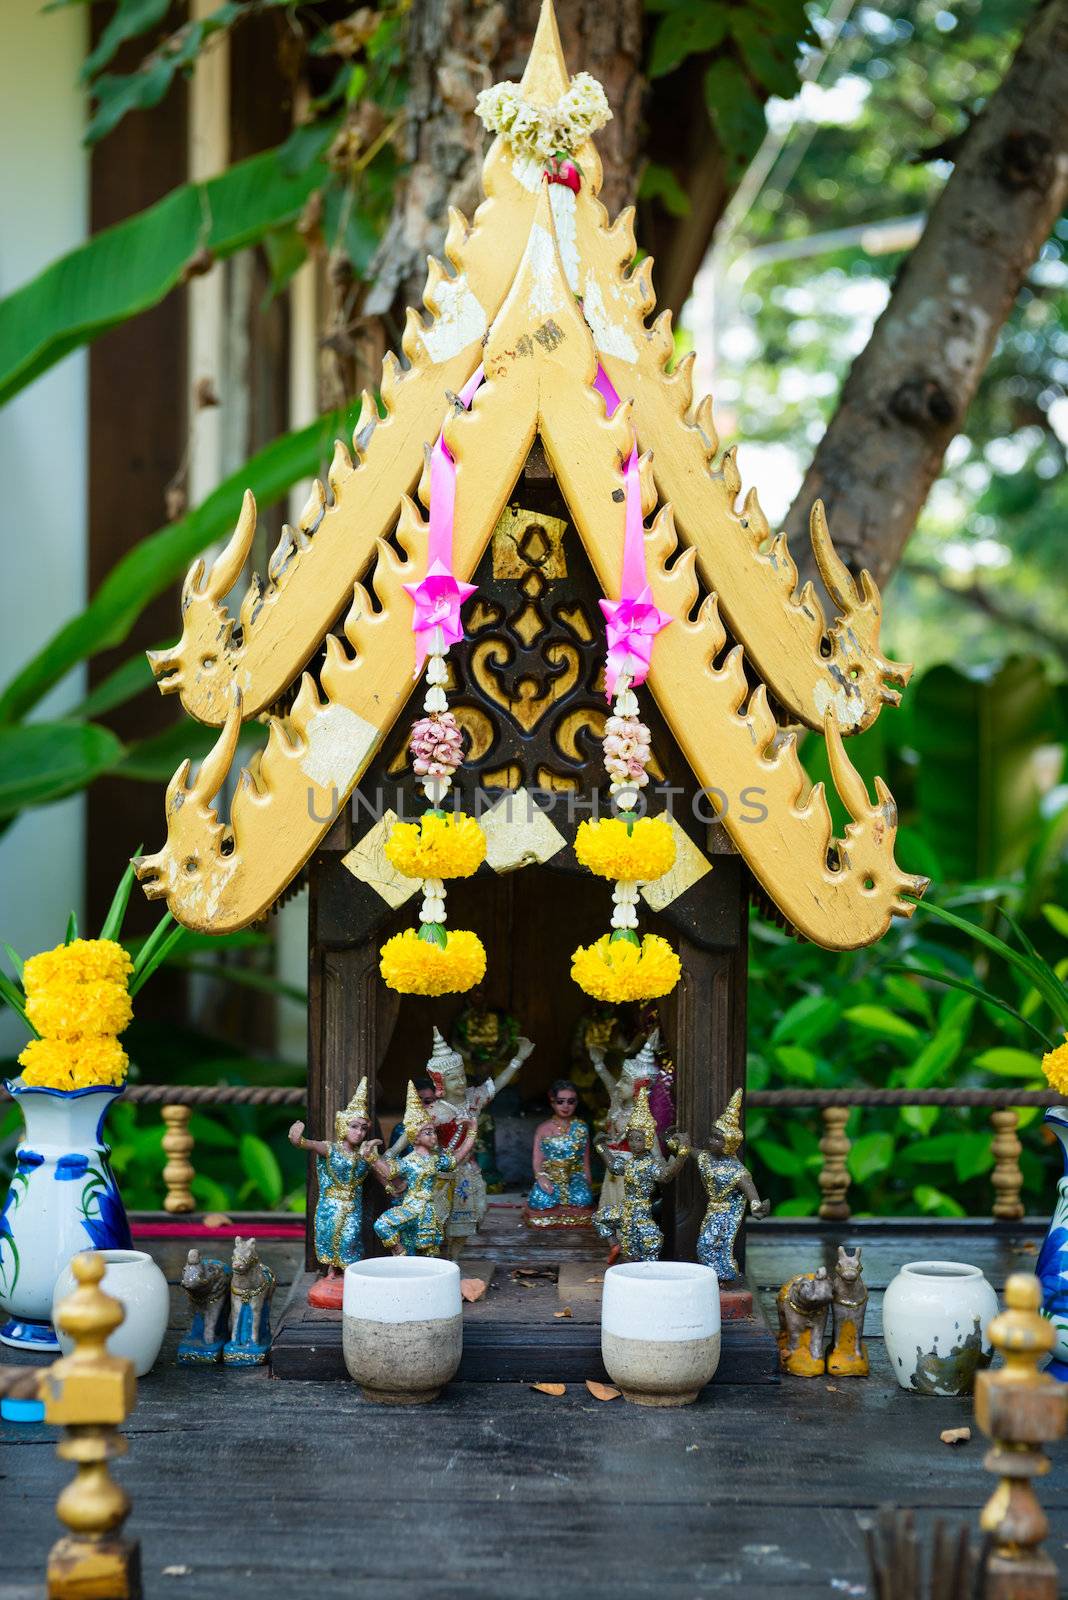 Small spirit hous in Thailand by iryna_rasko